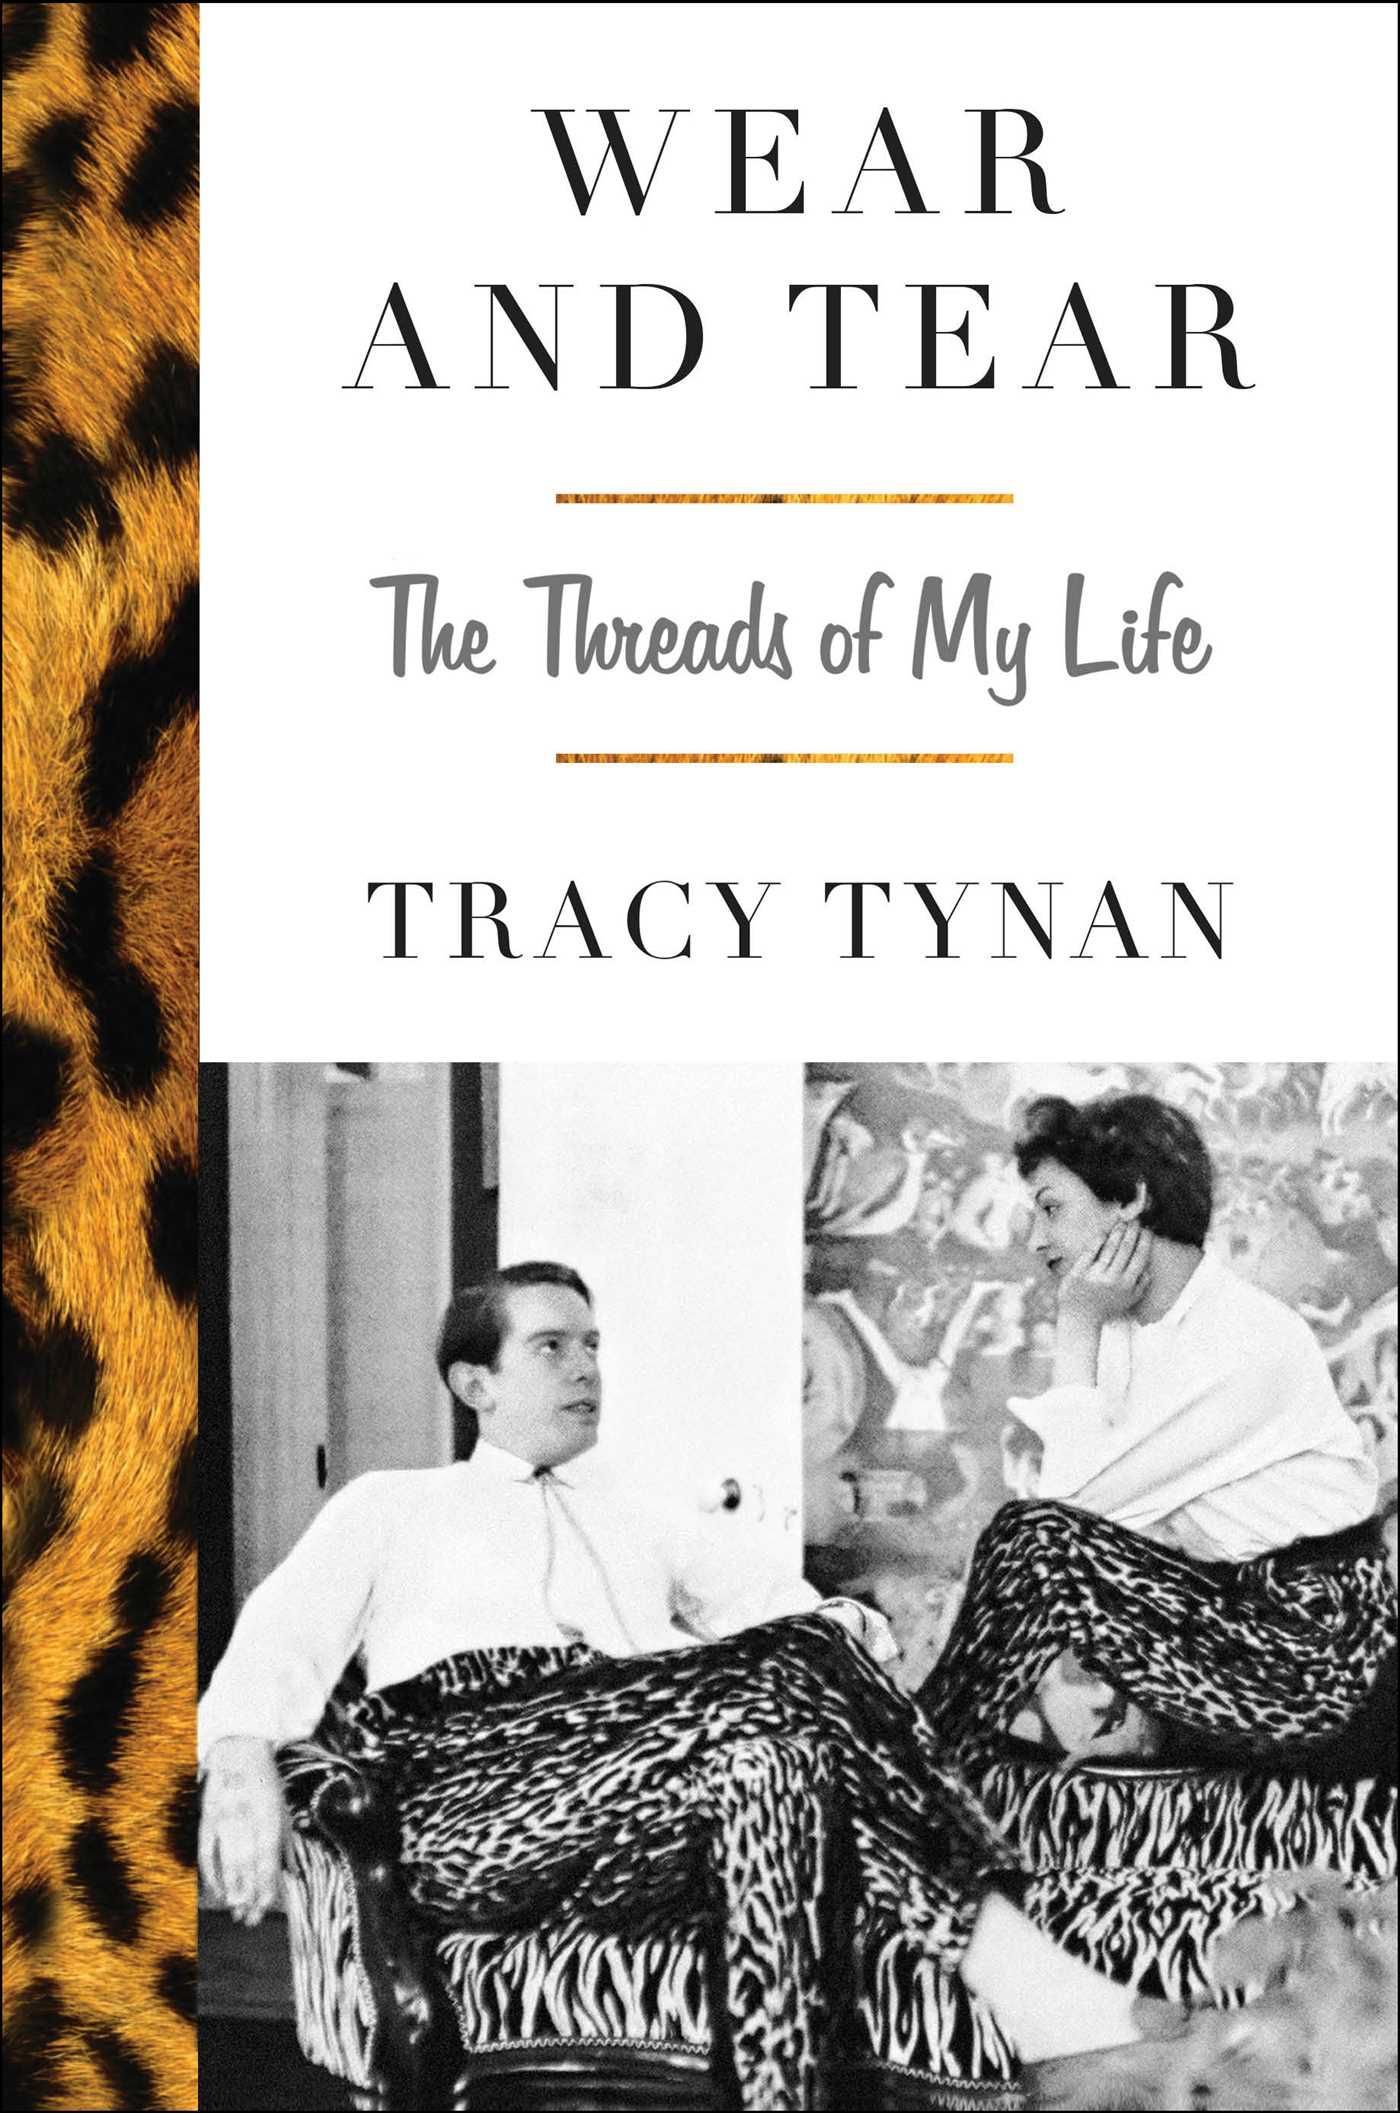 Radio Hour: Tracy Tynan's "Wear and Tear", plus D.W. Winnicott